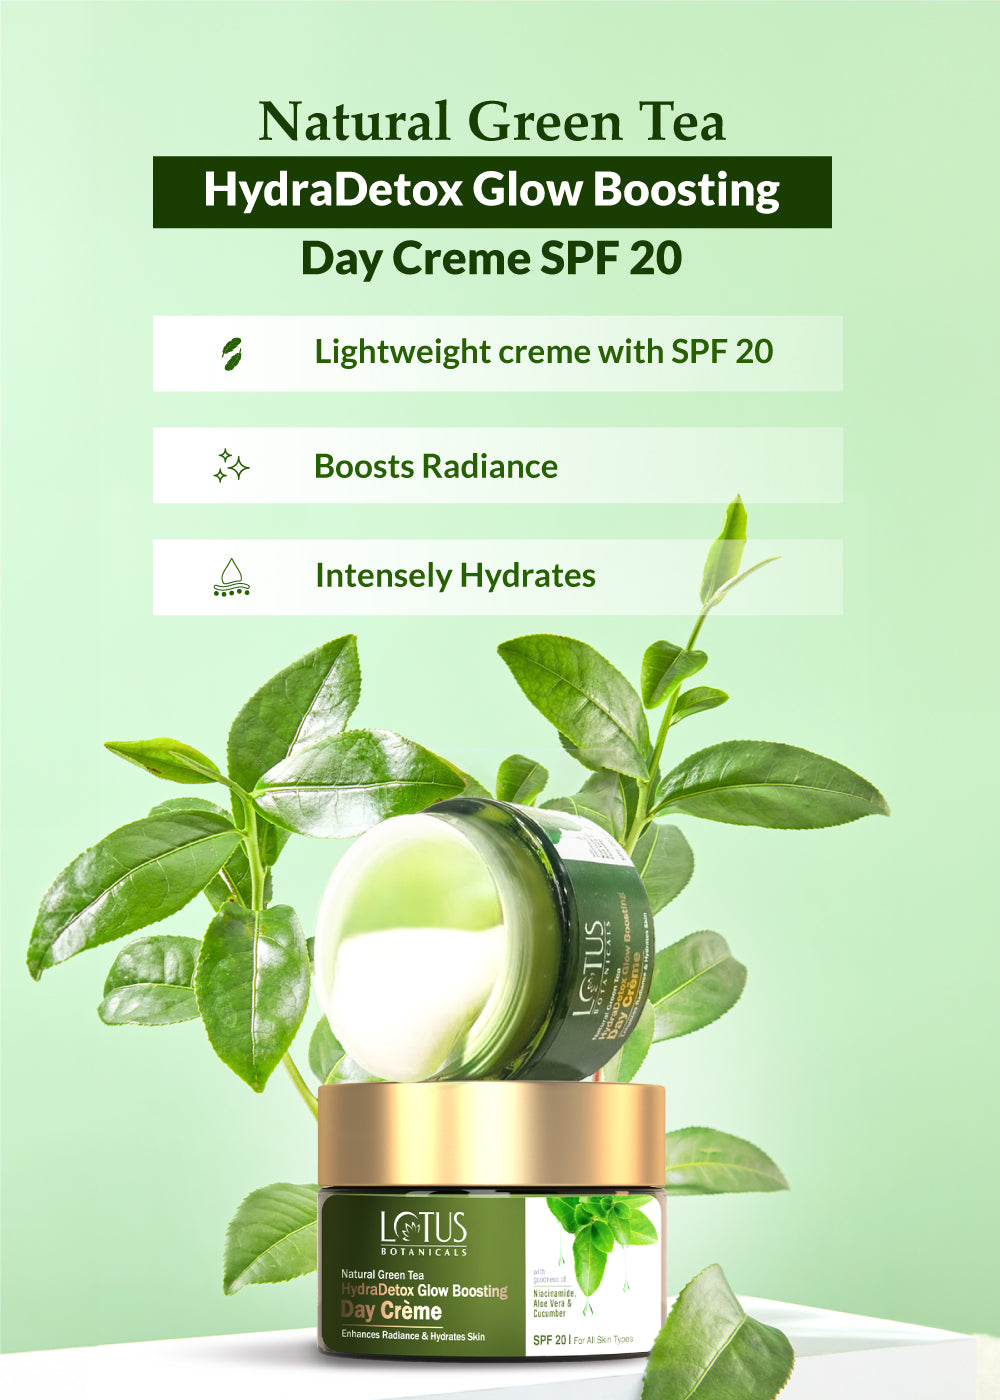 Natural Green Tea HydraDetox Glow Boosting Day Crème SPF 20